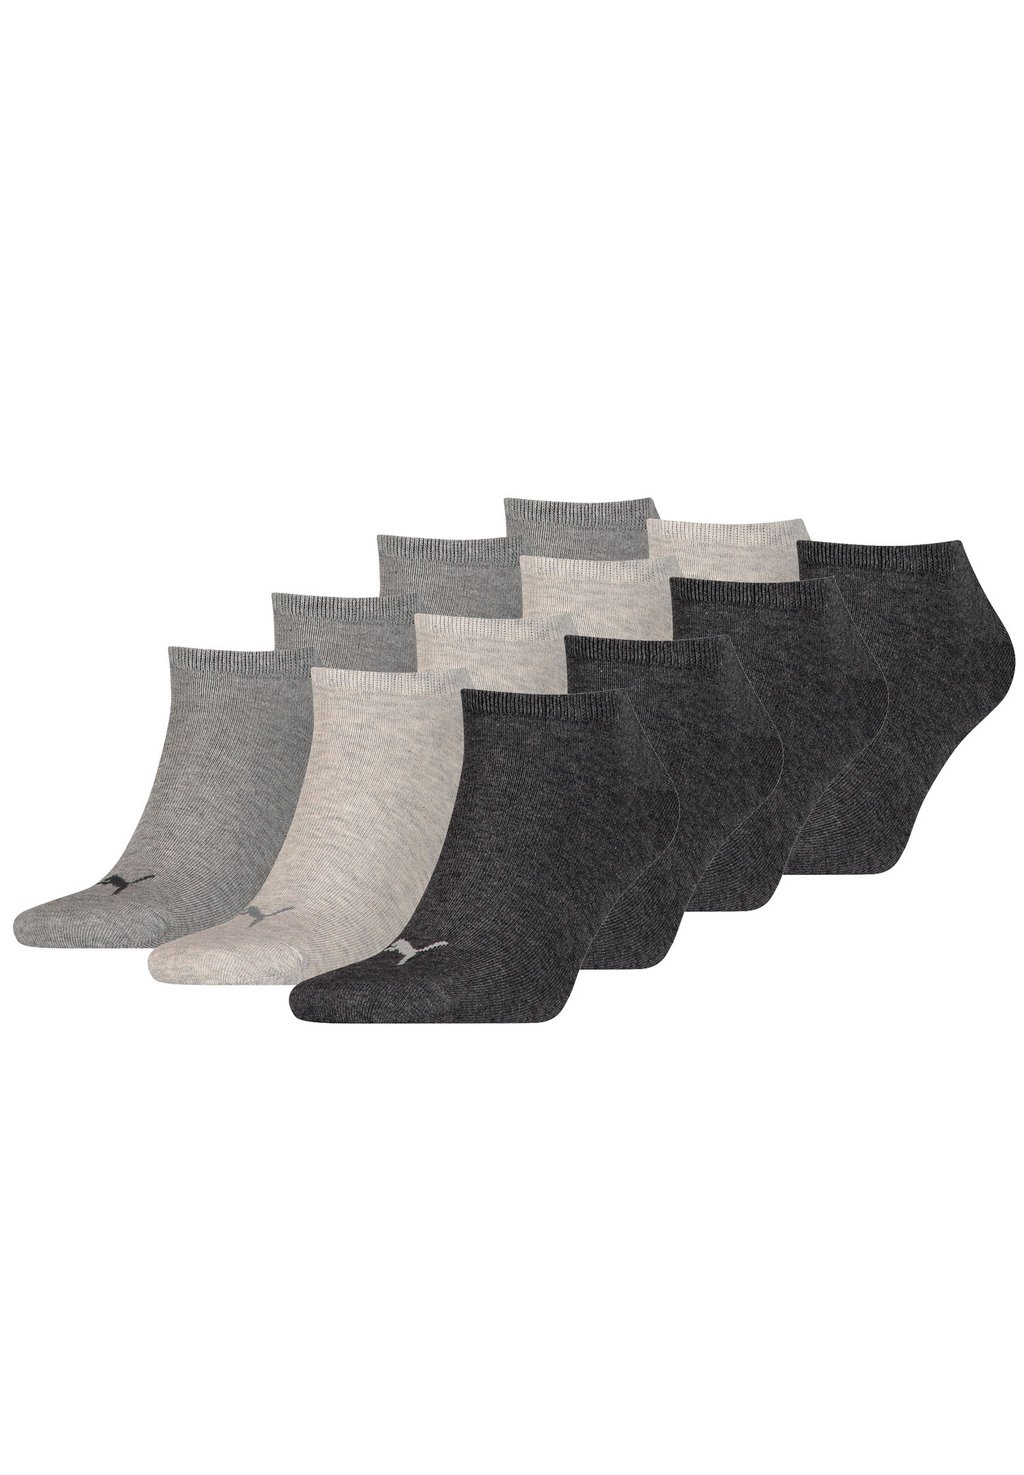 Спортивные носки 12 PACK Puma, цвет anthraci/l mel grey/m me